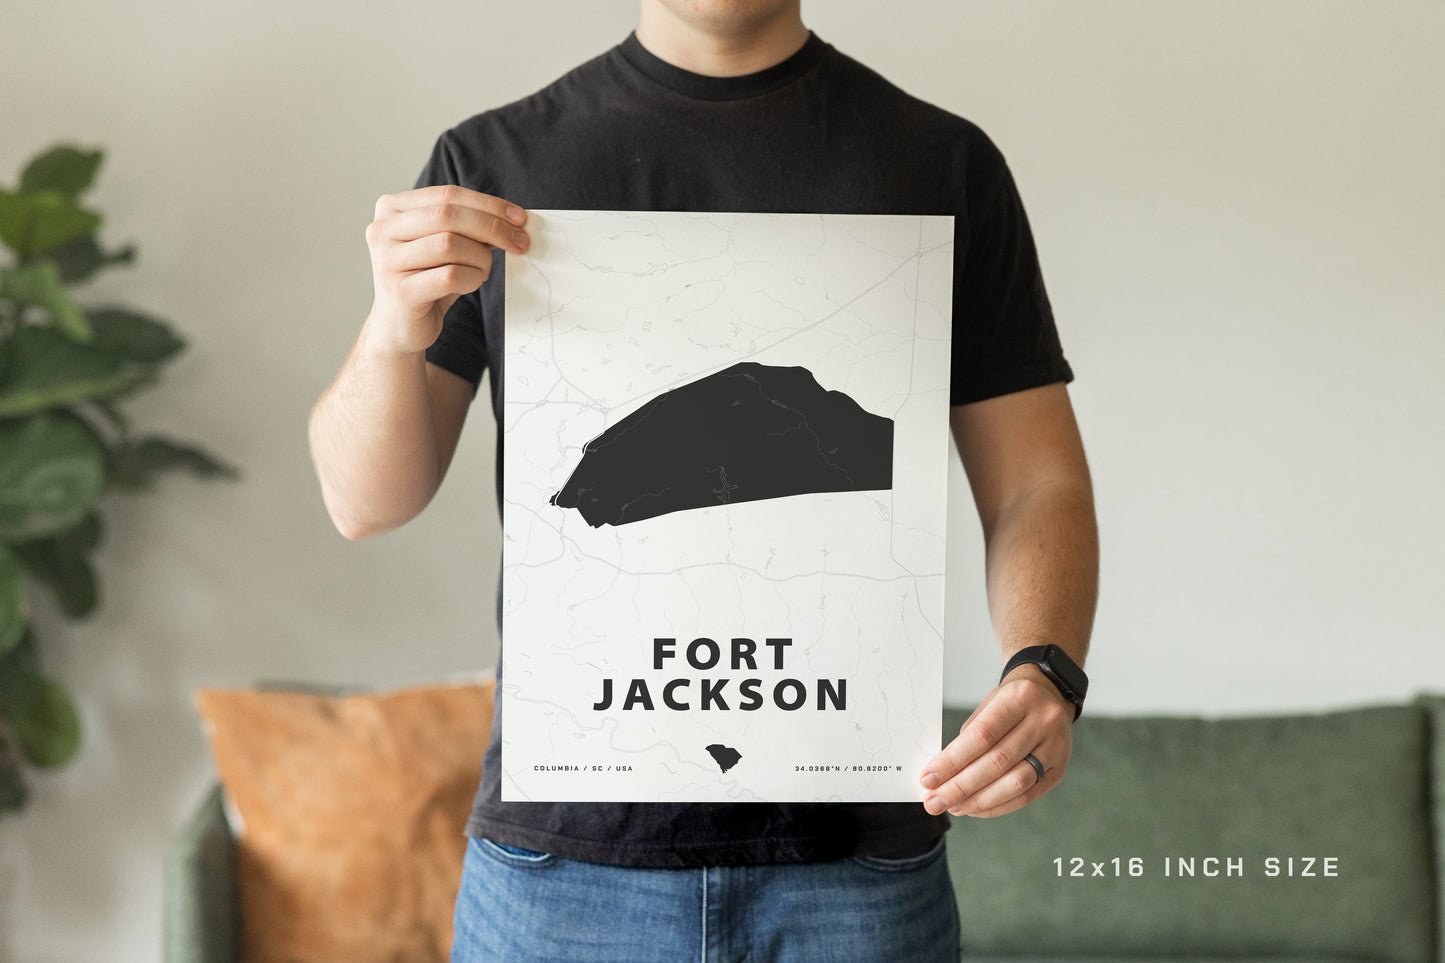 Fort Jackson Map Print